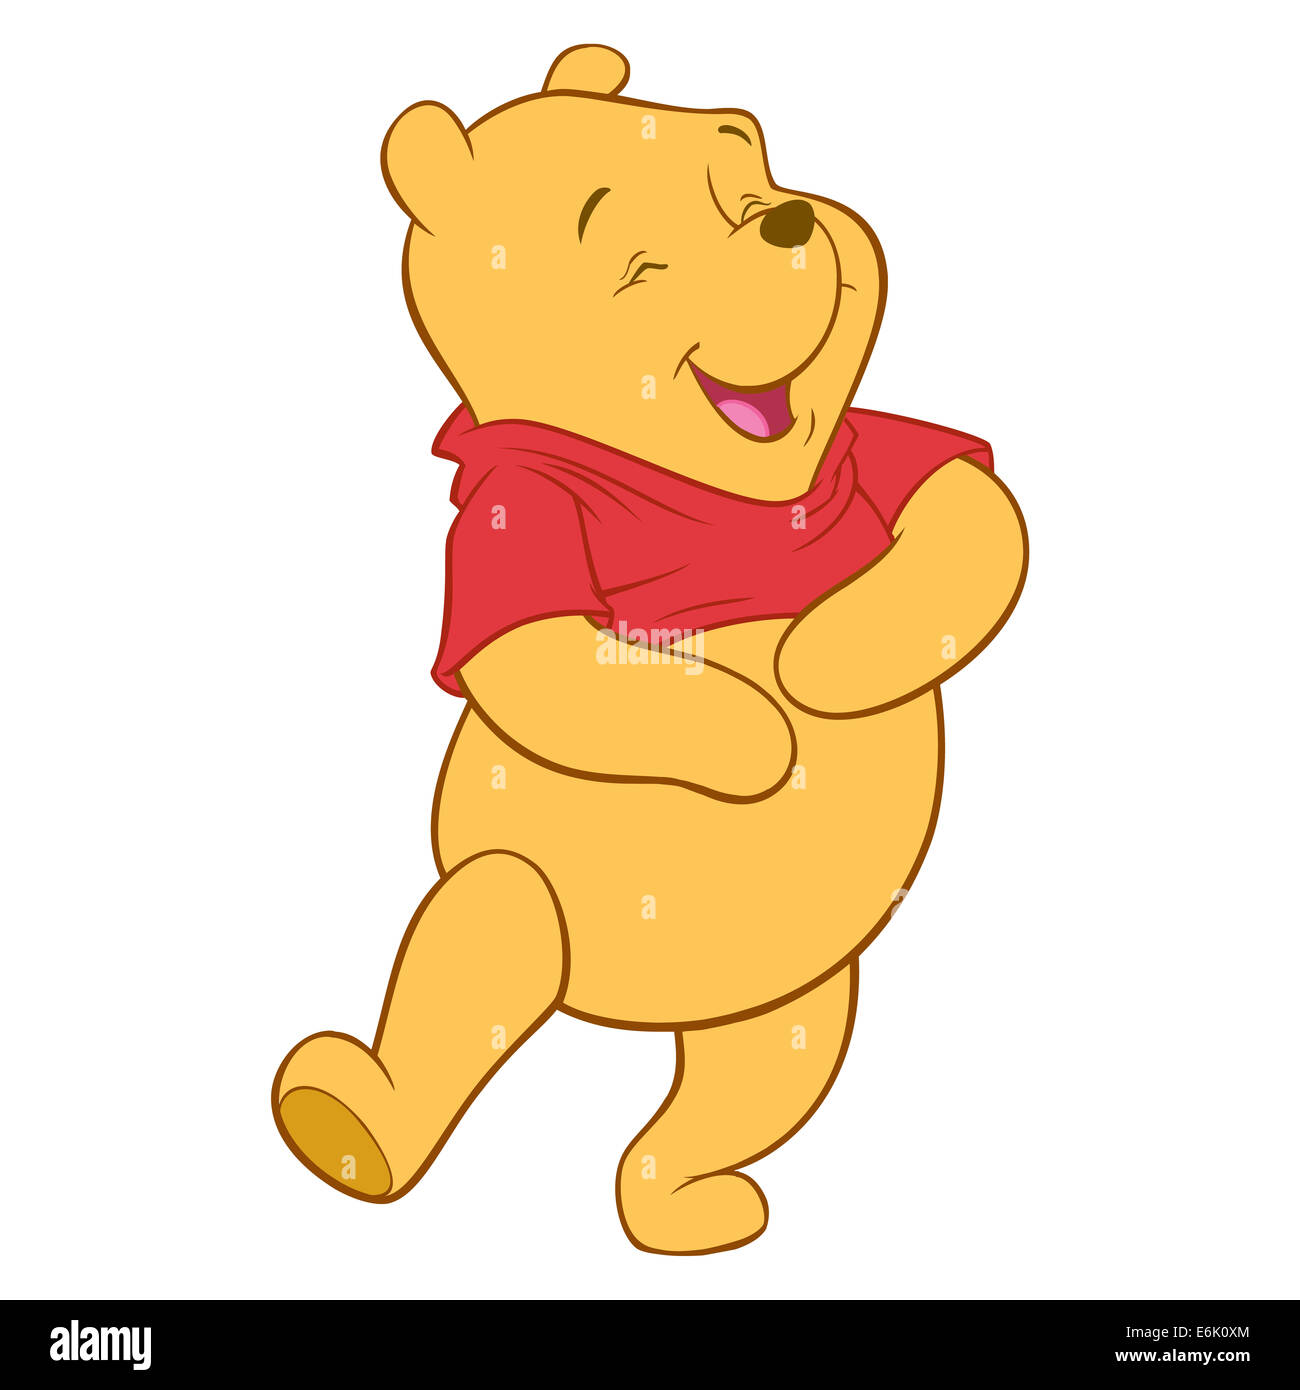 Winnie the Pooh,Pooh Bear vector illustration Stock Photo - Alamy